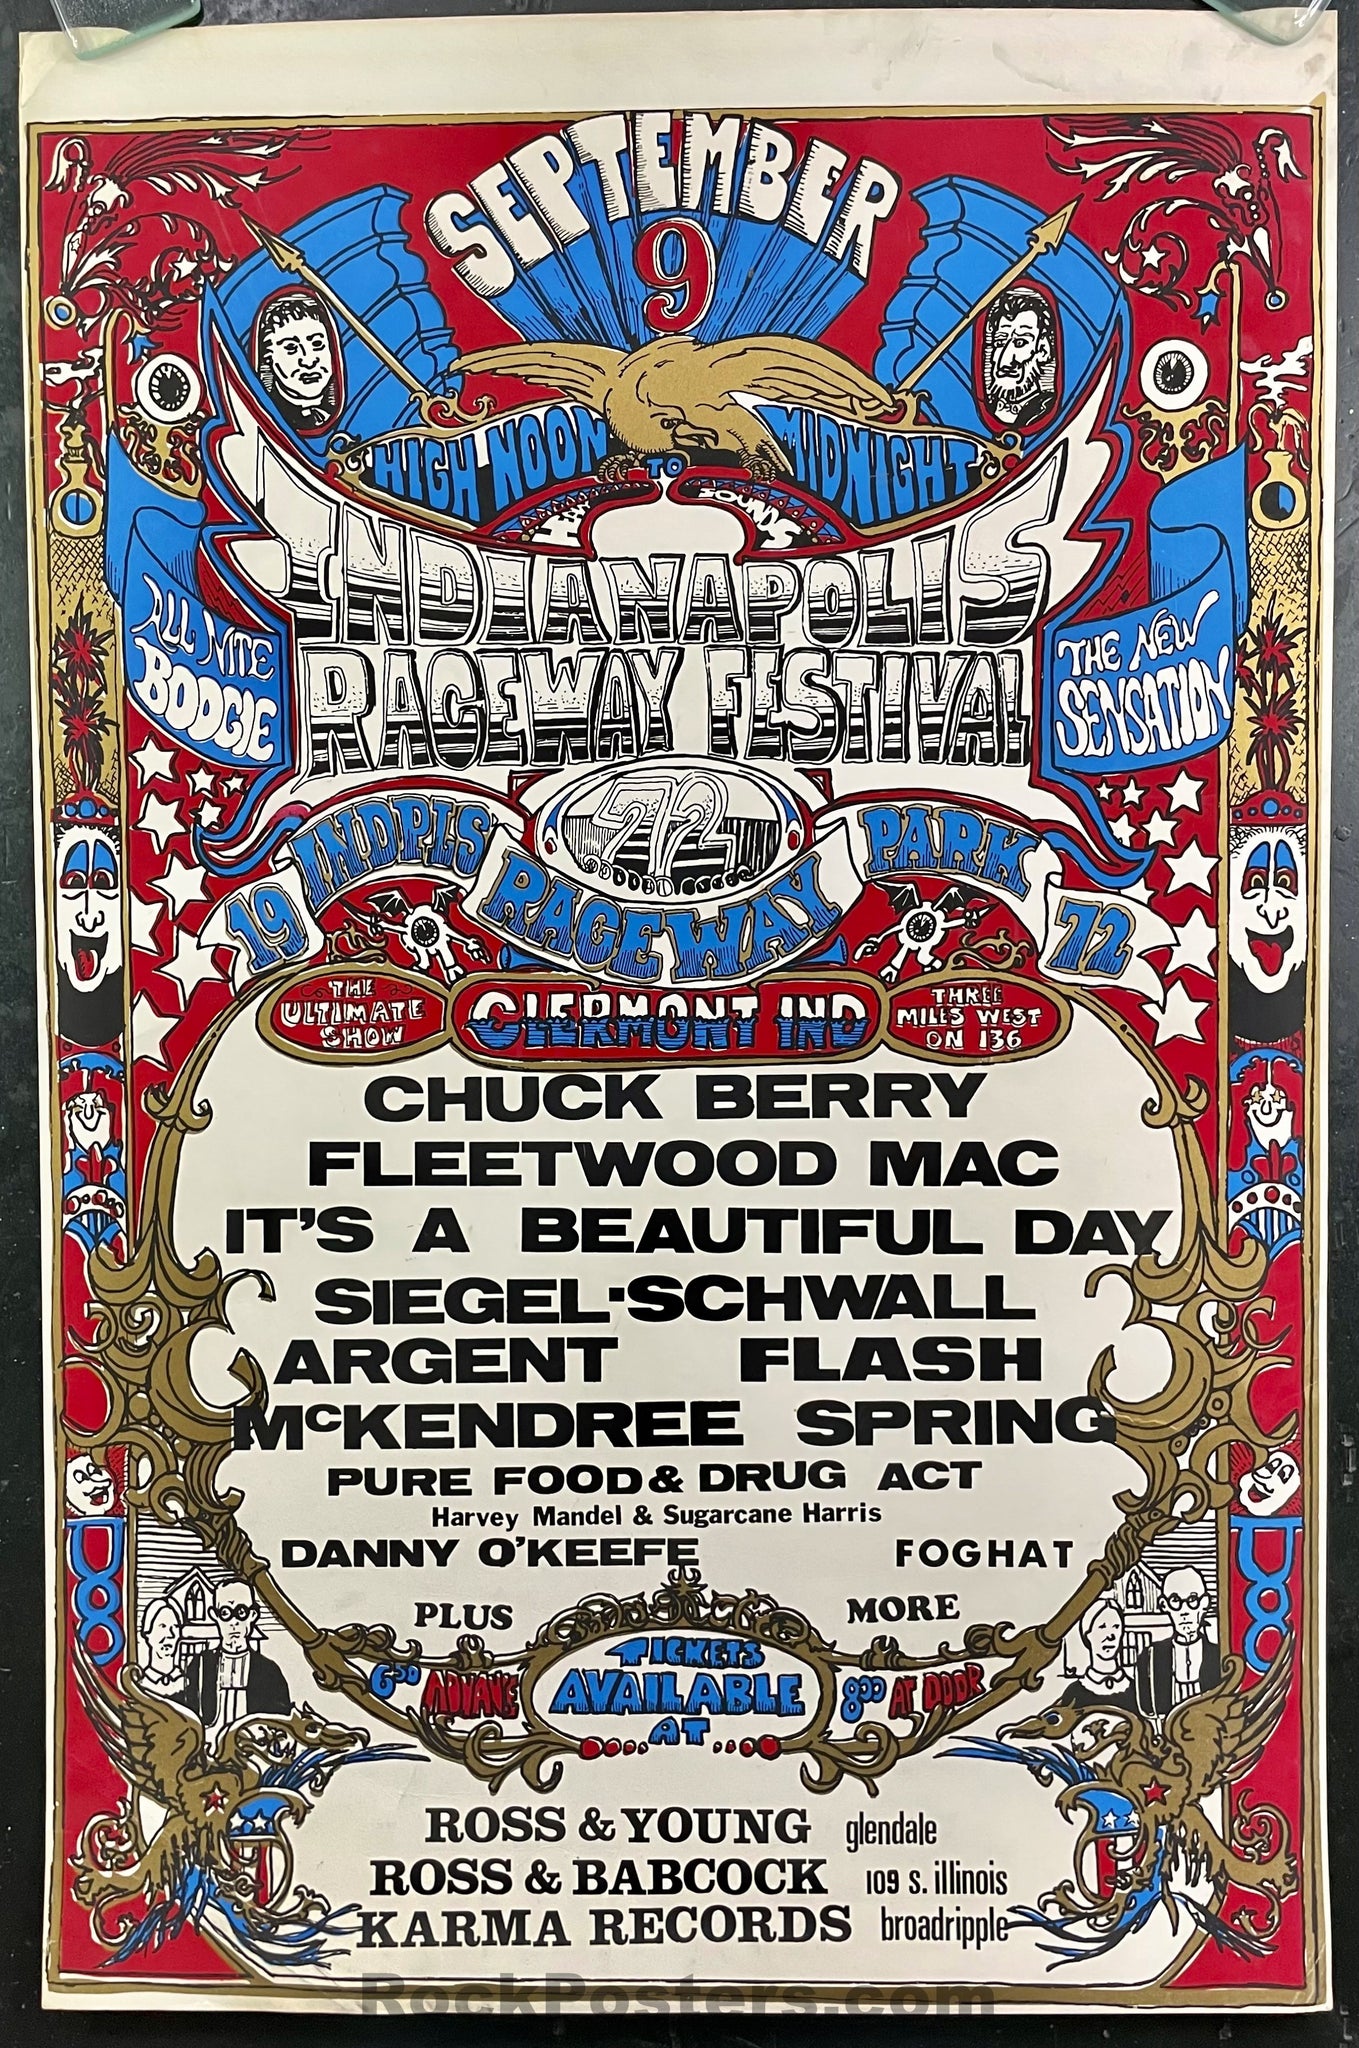 AUCTION - Fleetwood Mac Foghat - 1972 Poster - Indianapolis Festival - Excellent